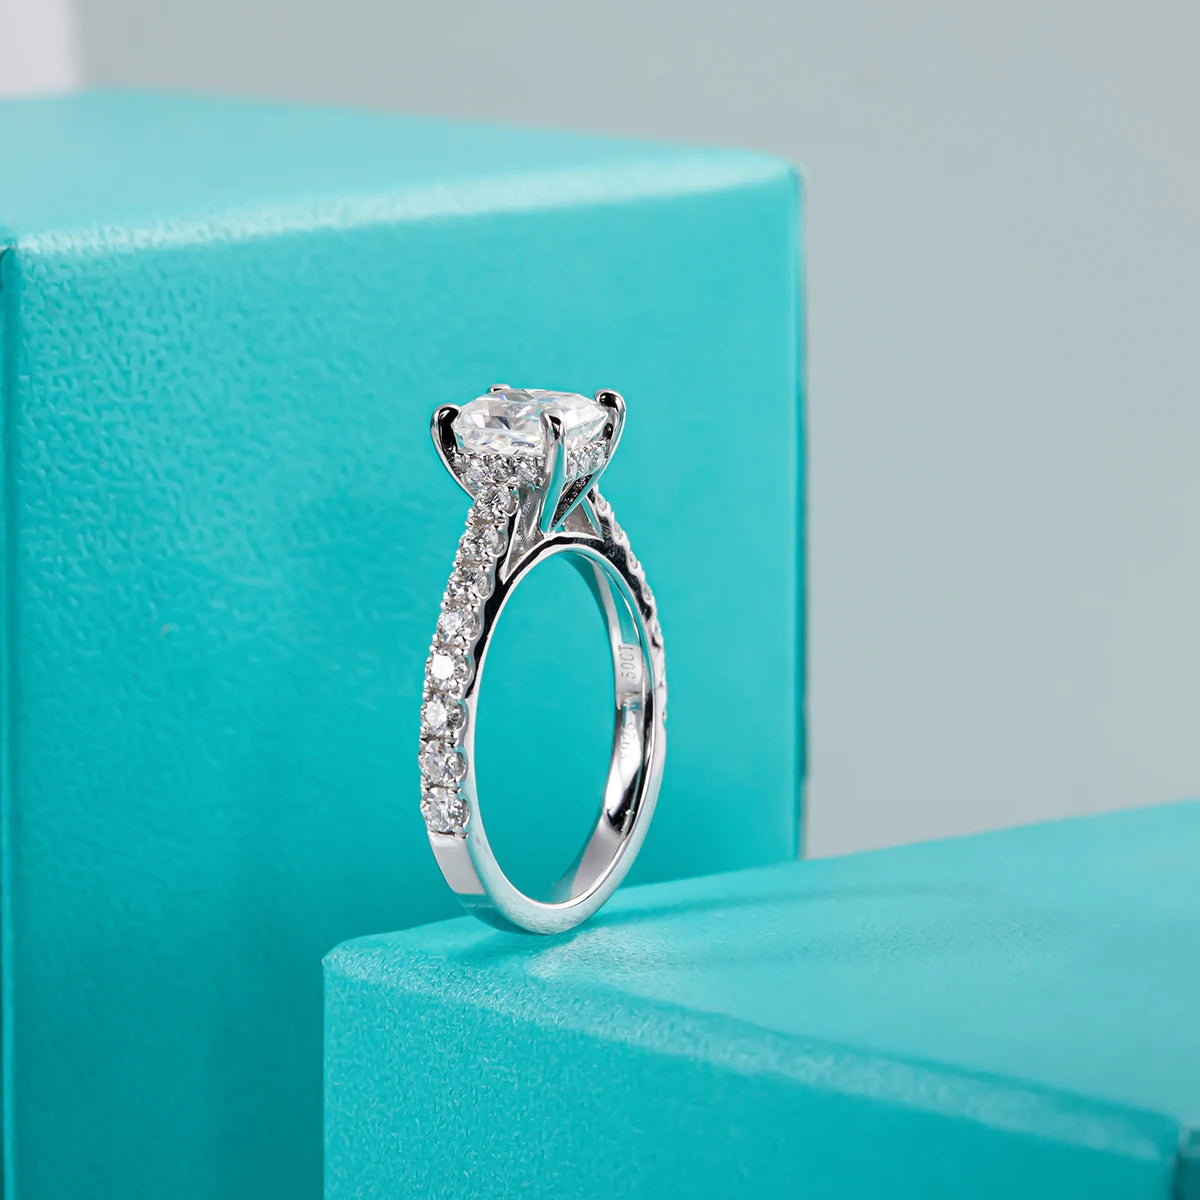 Elegant Sparkling Moissanite Engagement Ring - Simply Perfect!